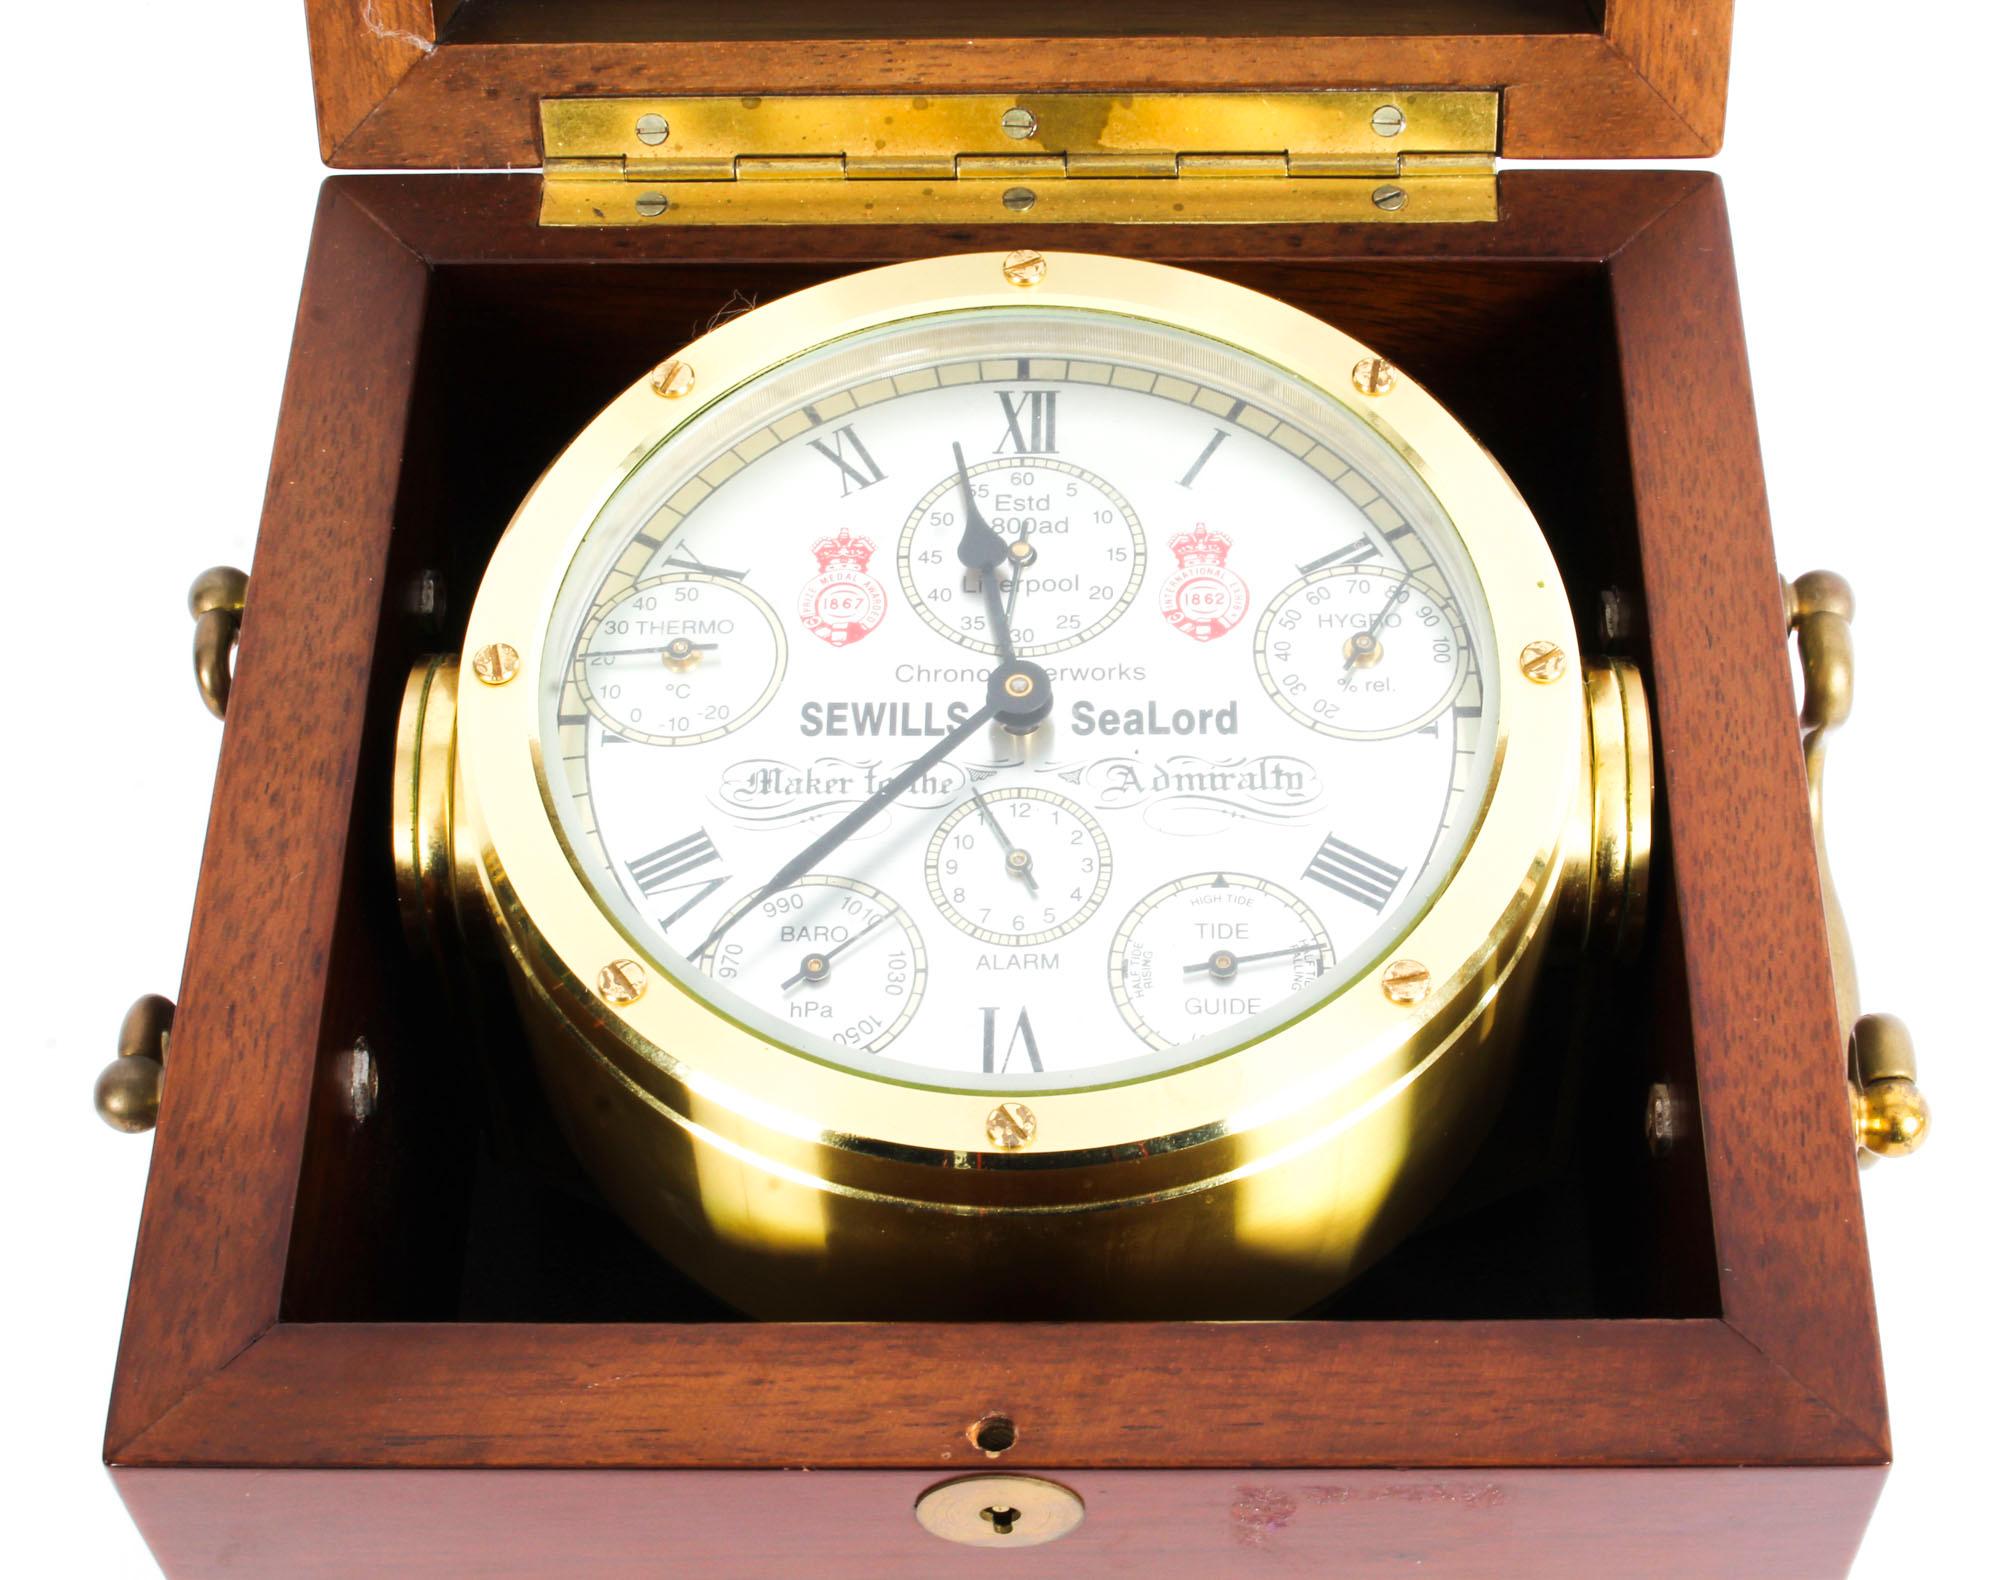 Mahogany Cased Sewills Sealord Nelson Chronometer Compendium, 20th Century 7